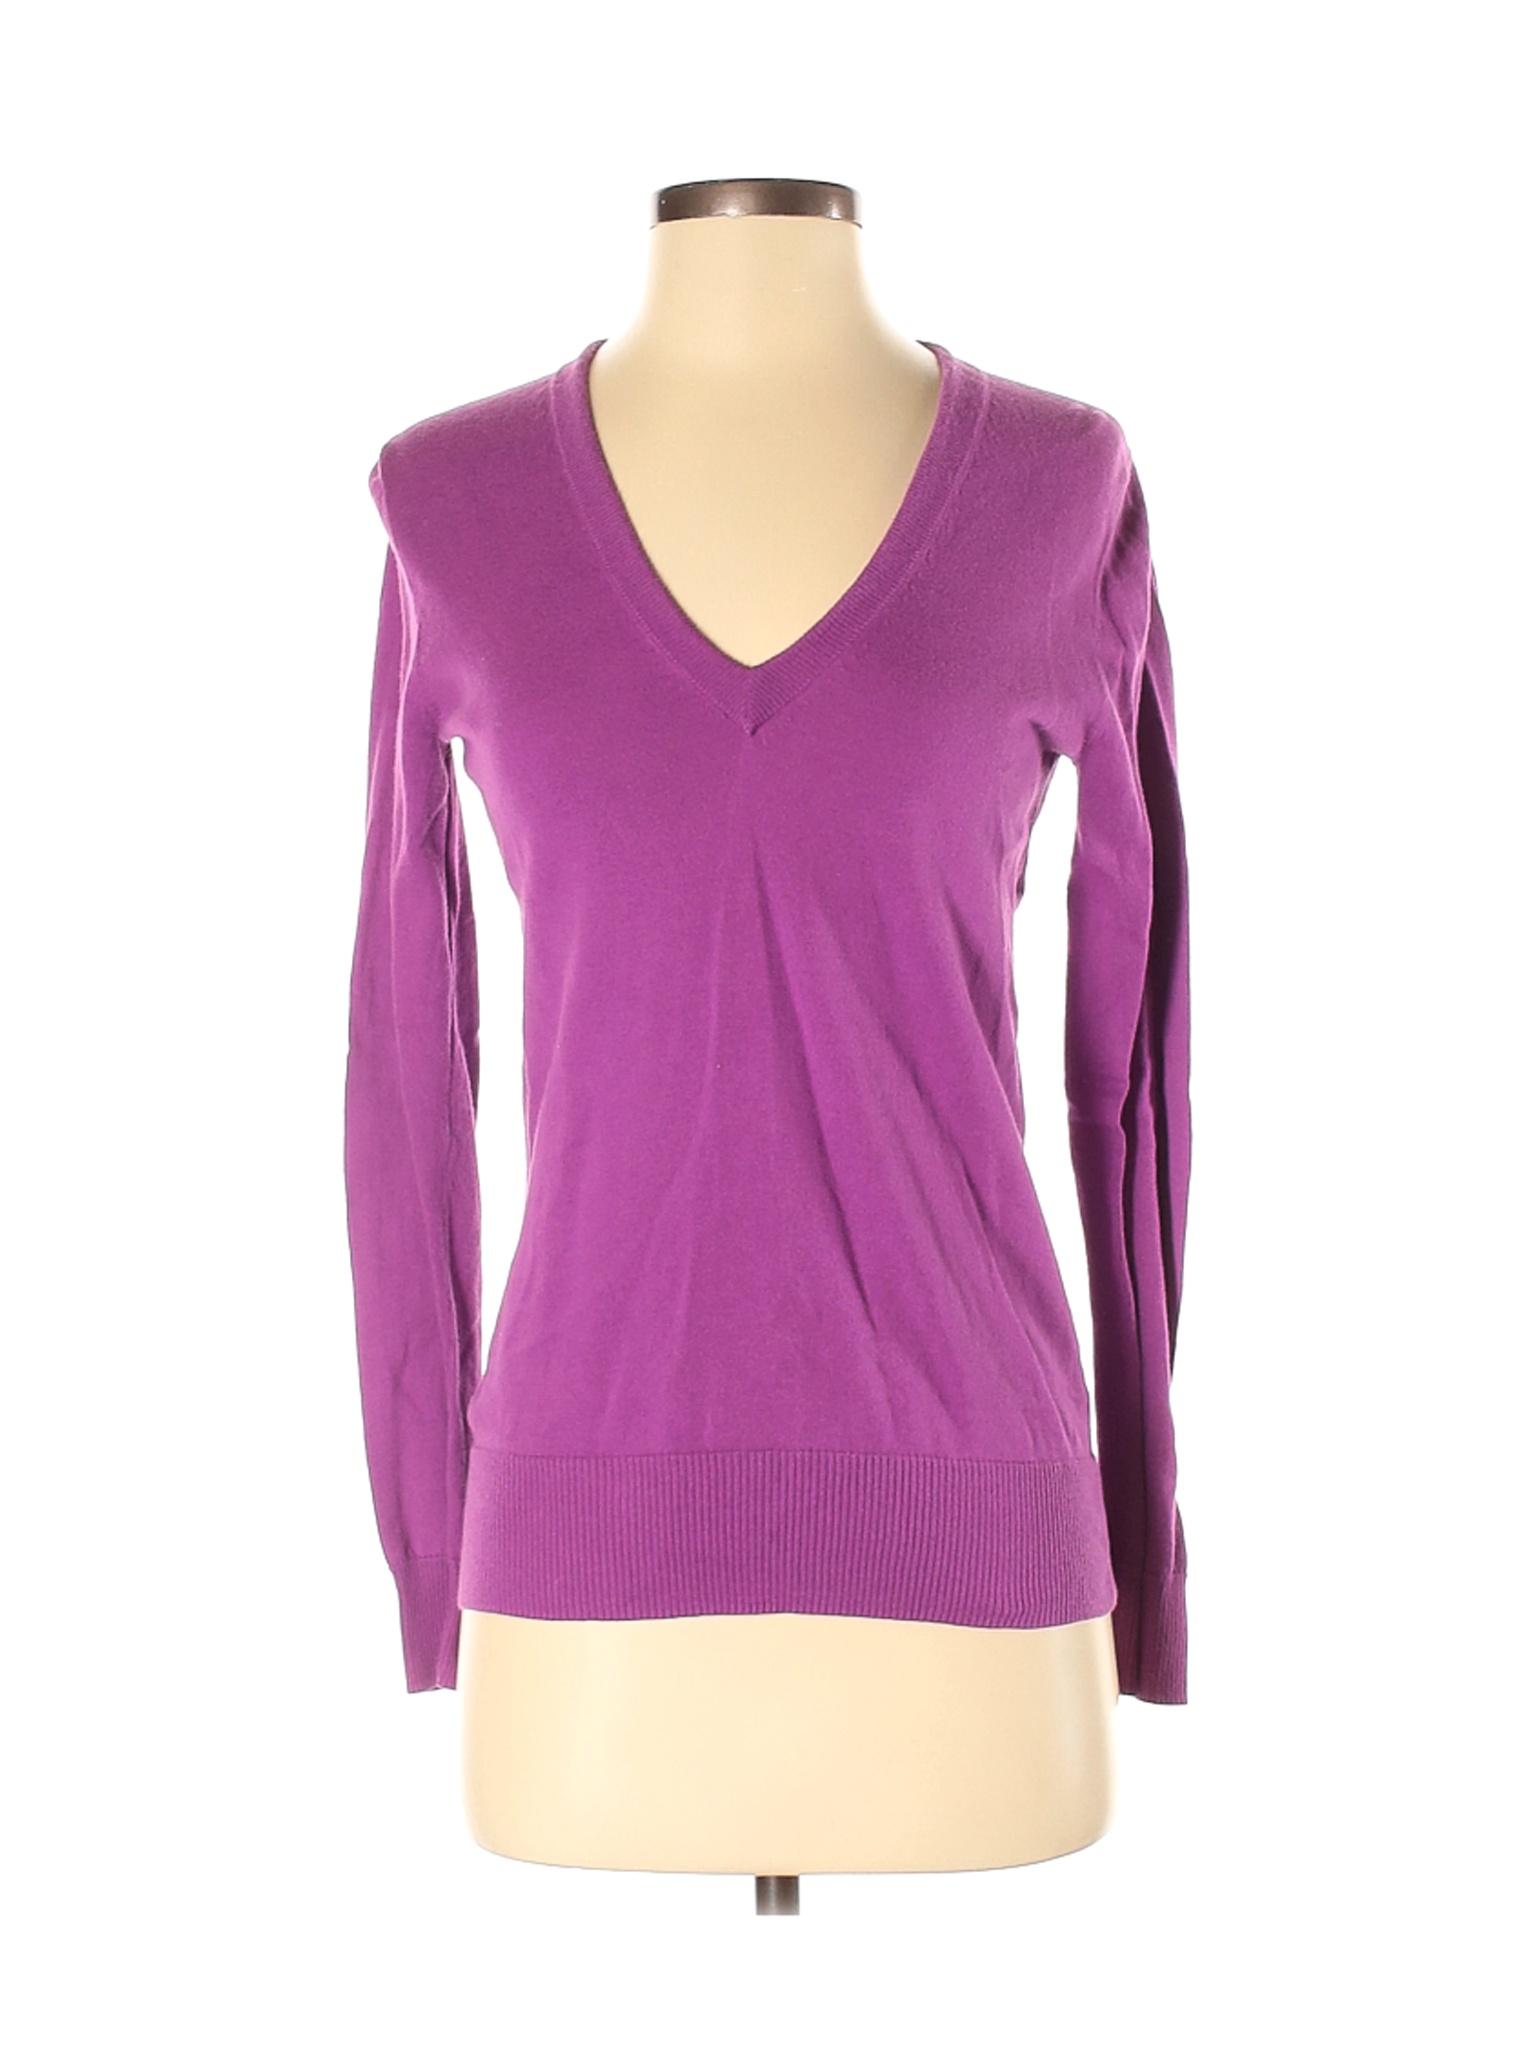 J.Crew Women Purple Pullover Sweater S | eBay